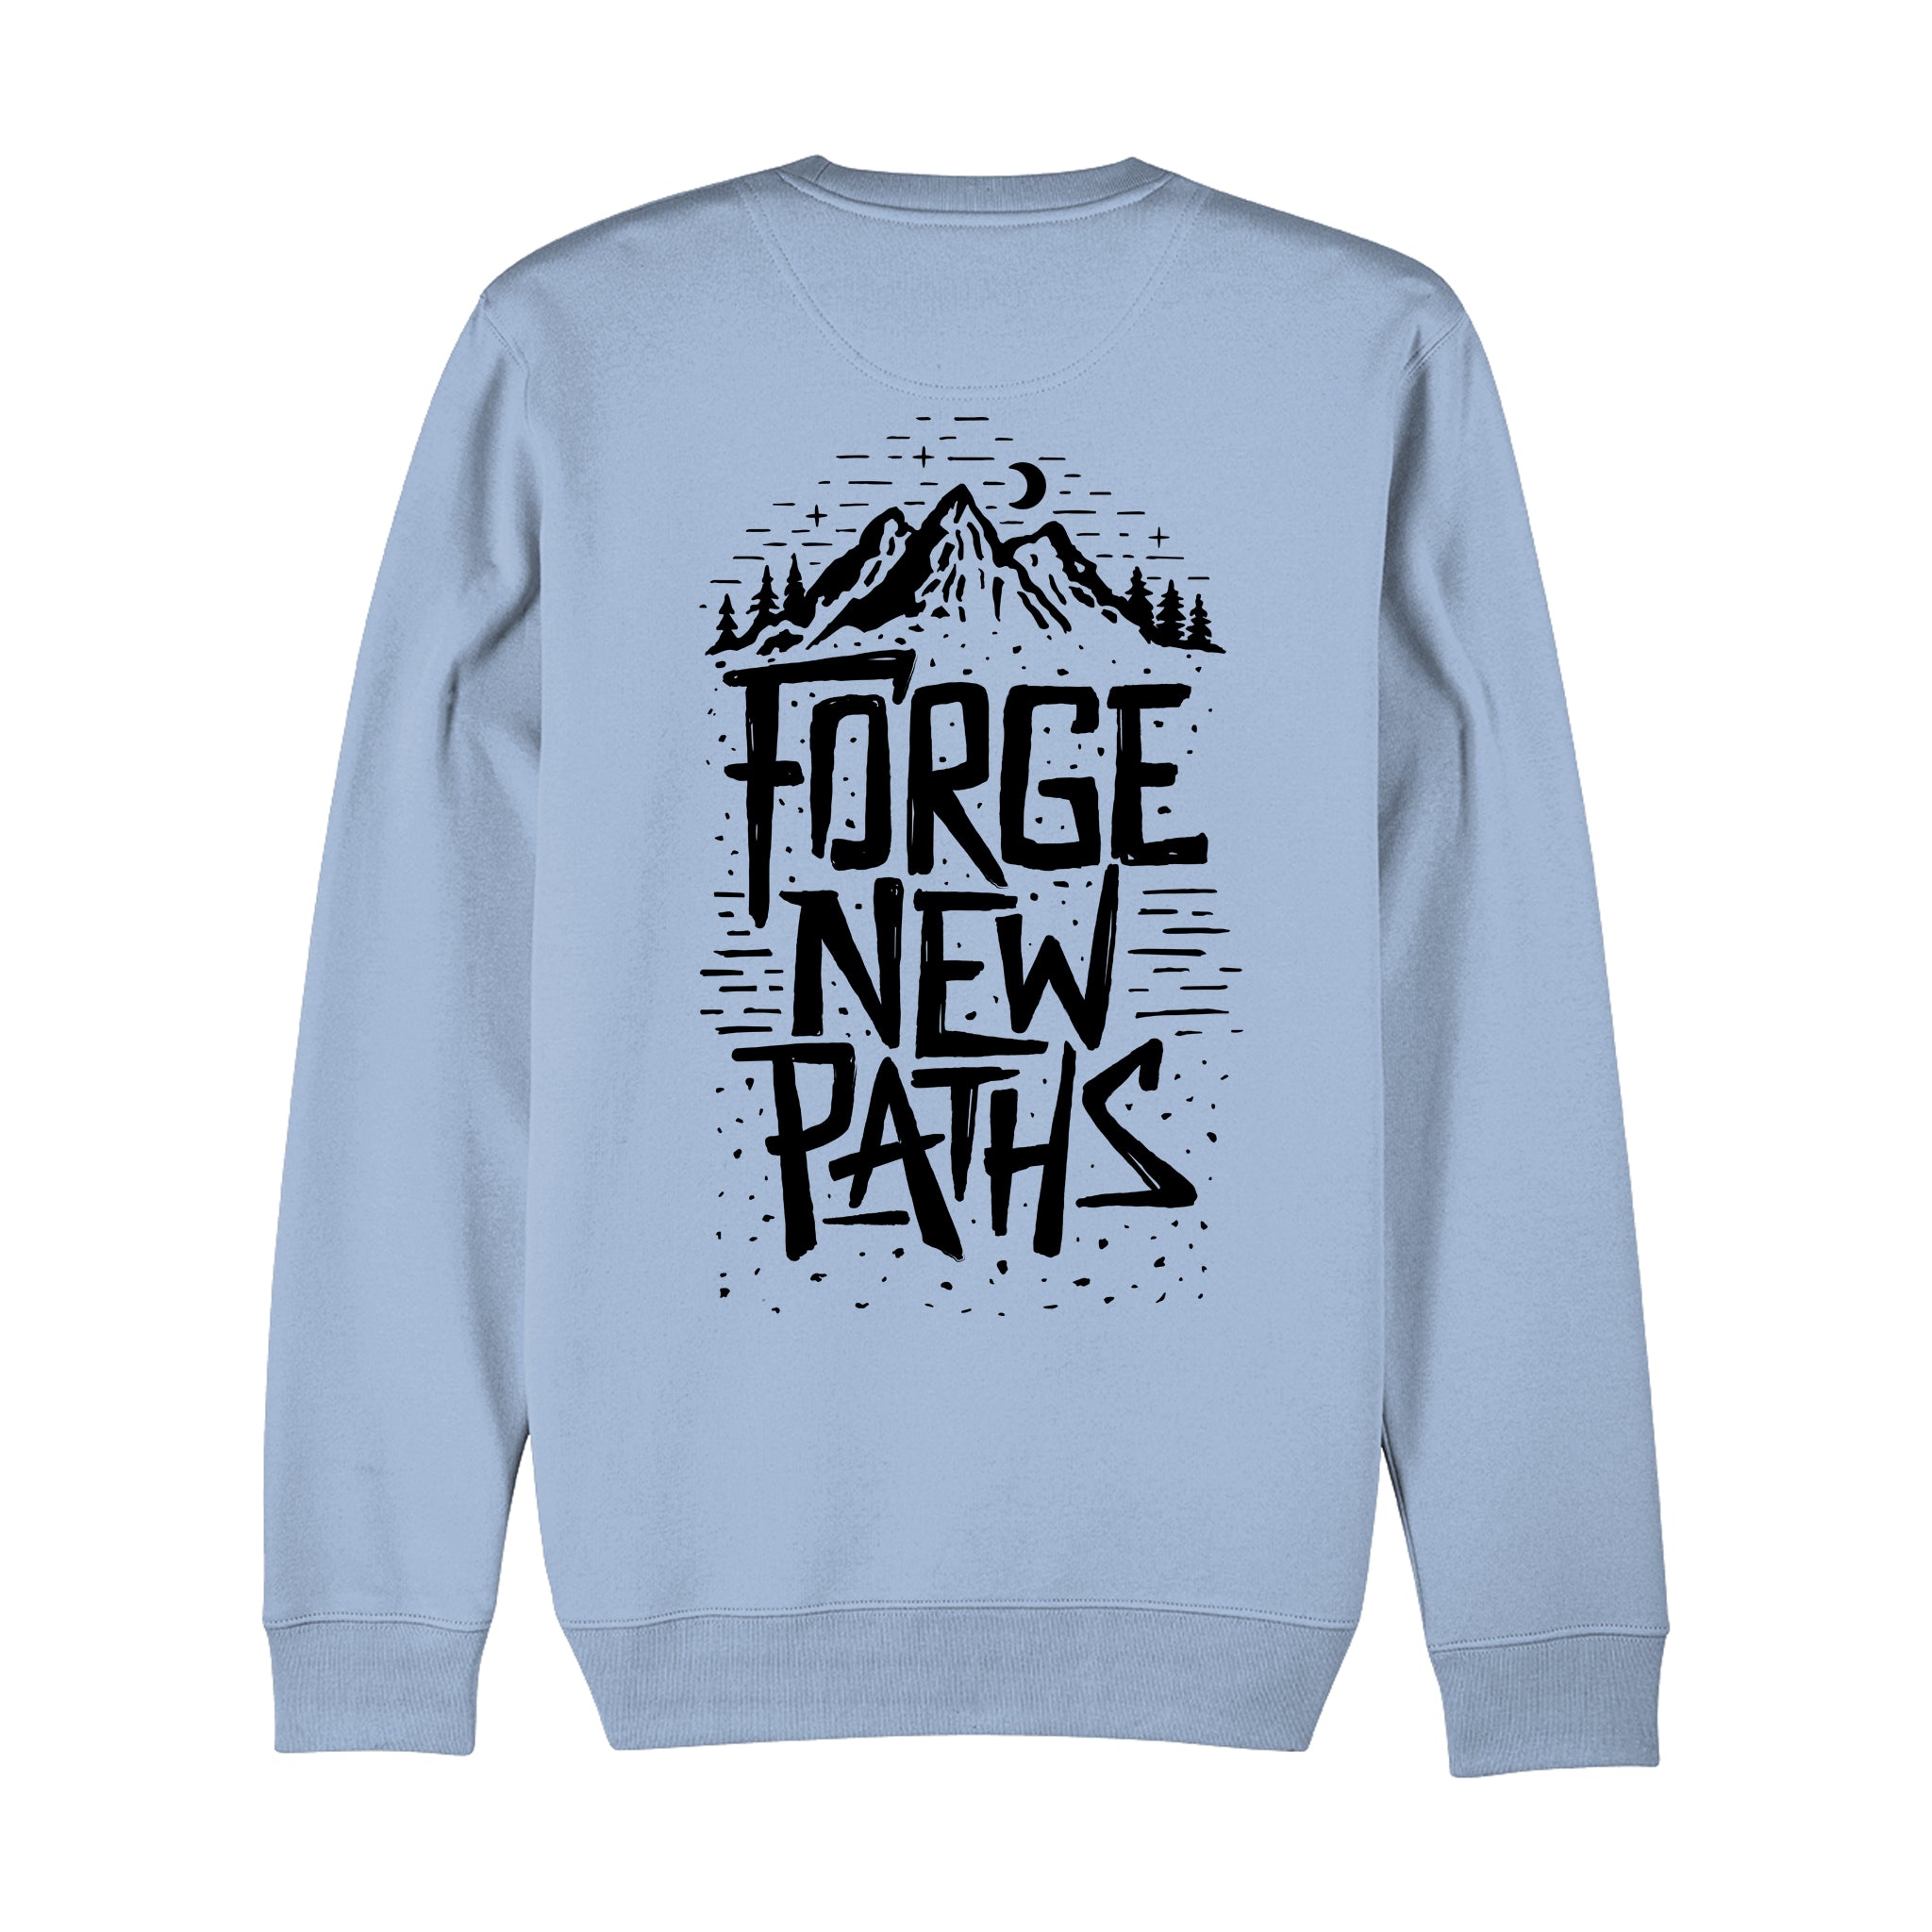 'Forge New Paths' Men's Sweatshirt